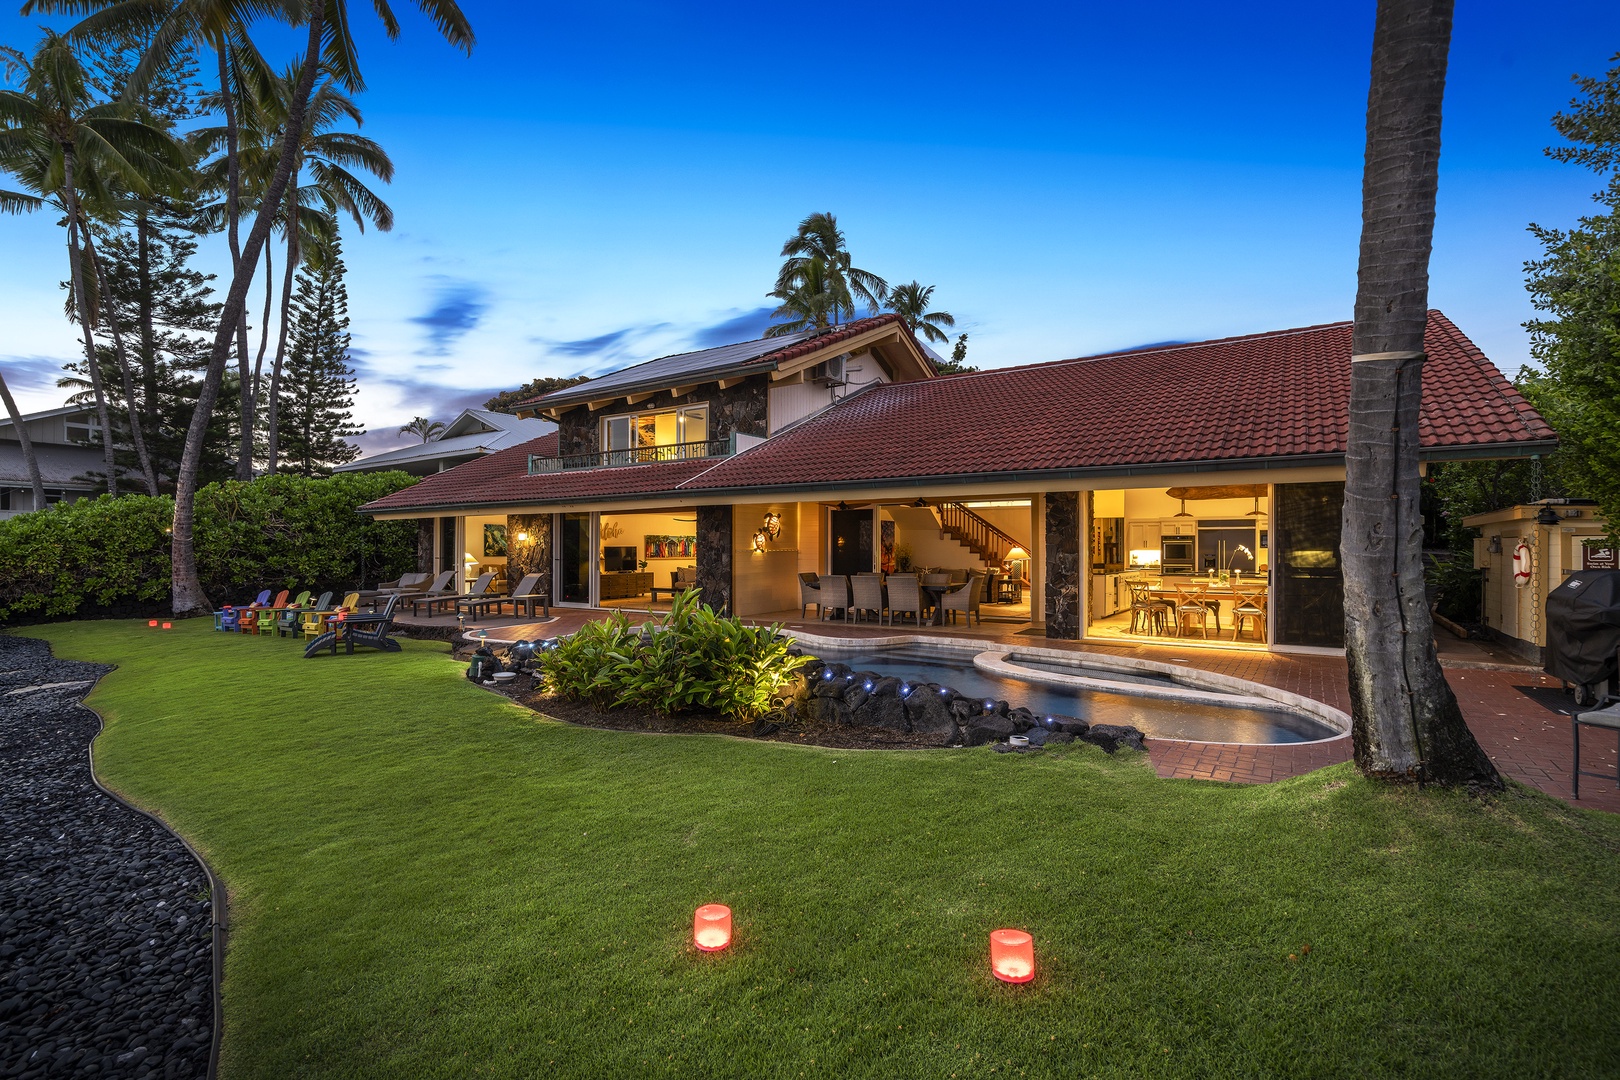 Kailua Kona Vacation Rentals, Hale Pua - Just before twilight in the spacious back yard